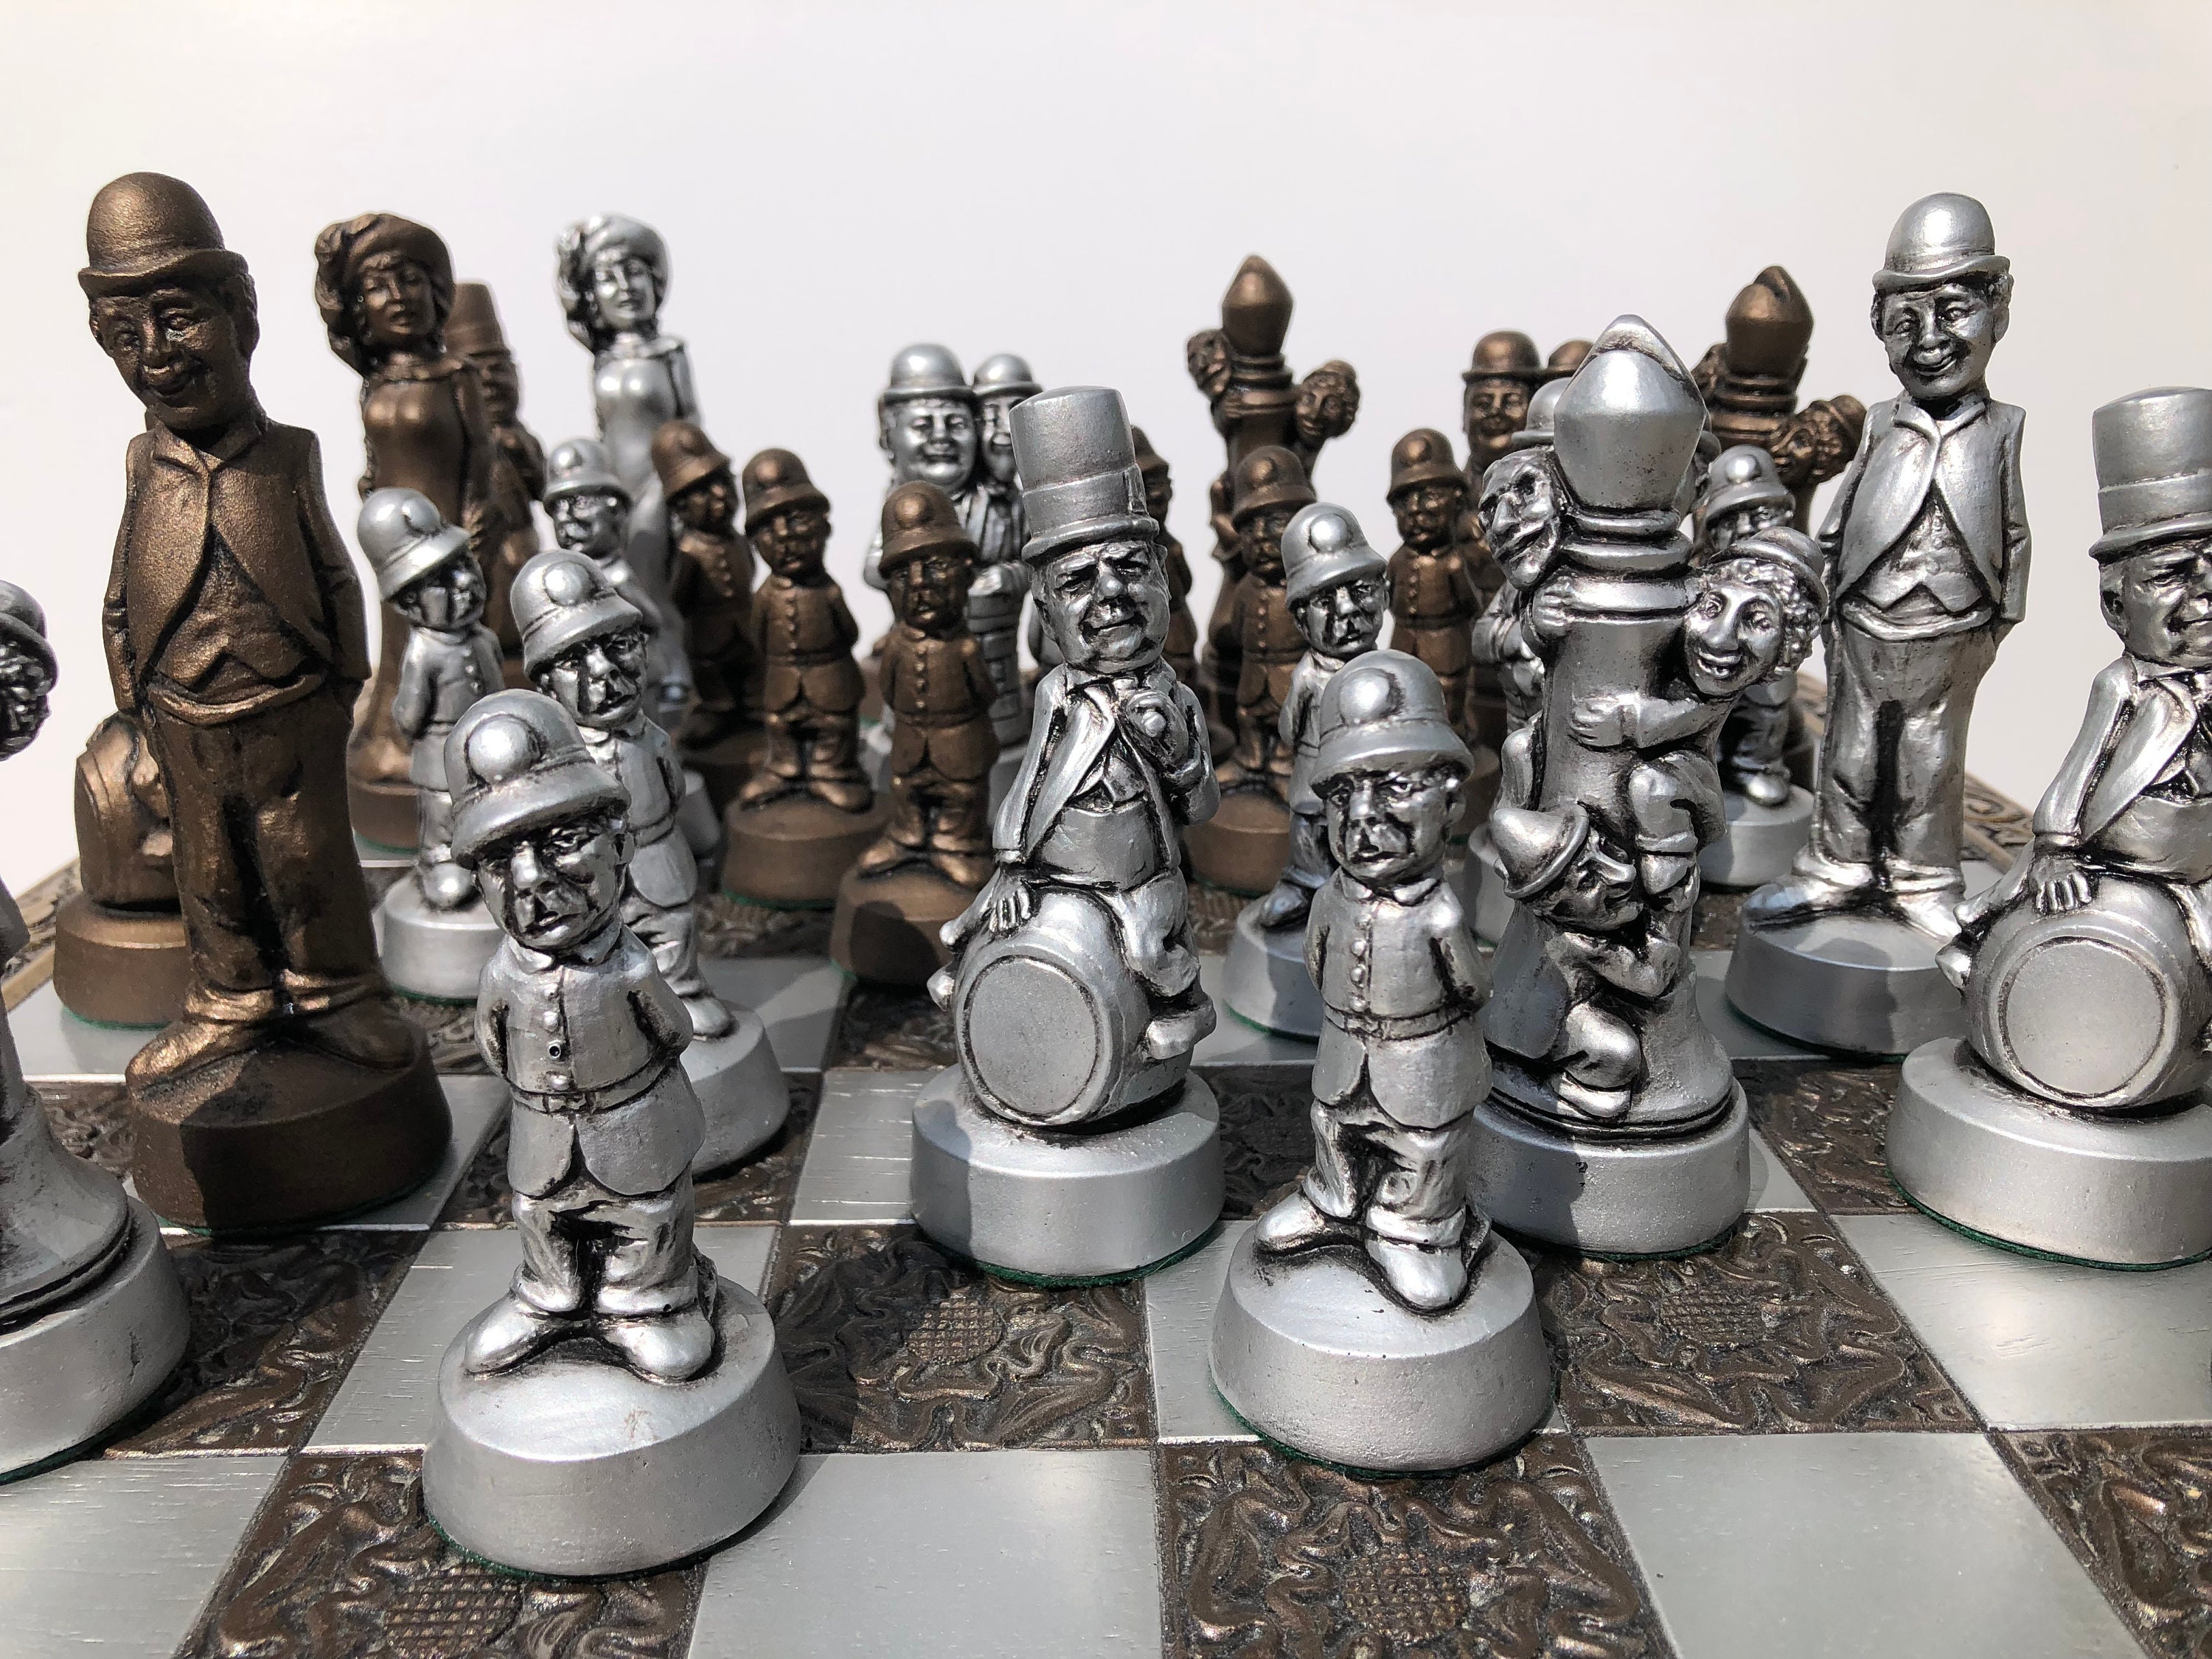 Movie Chess Set 